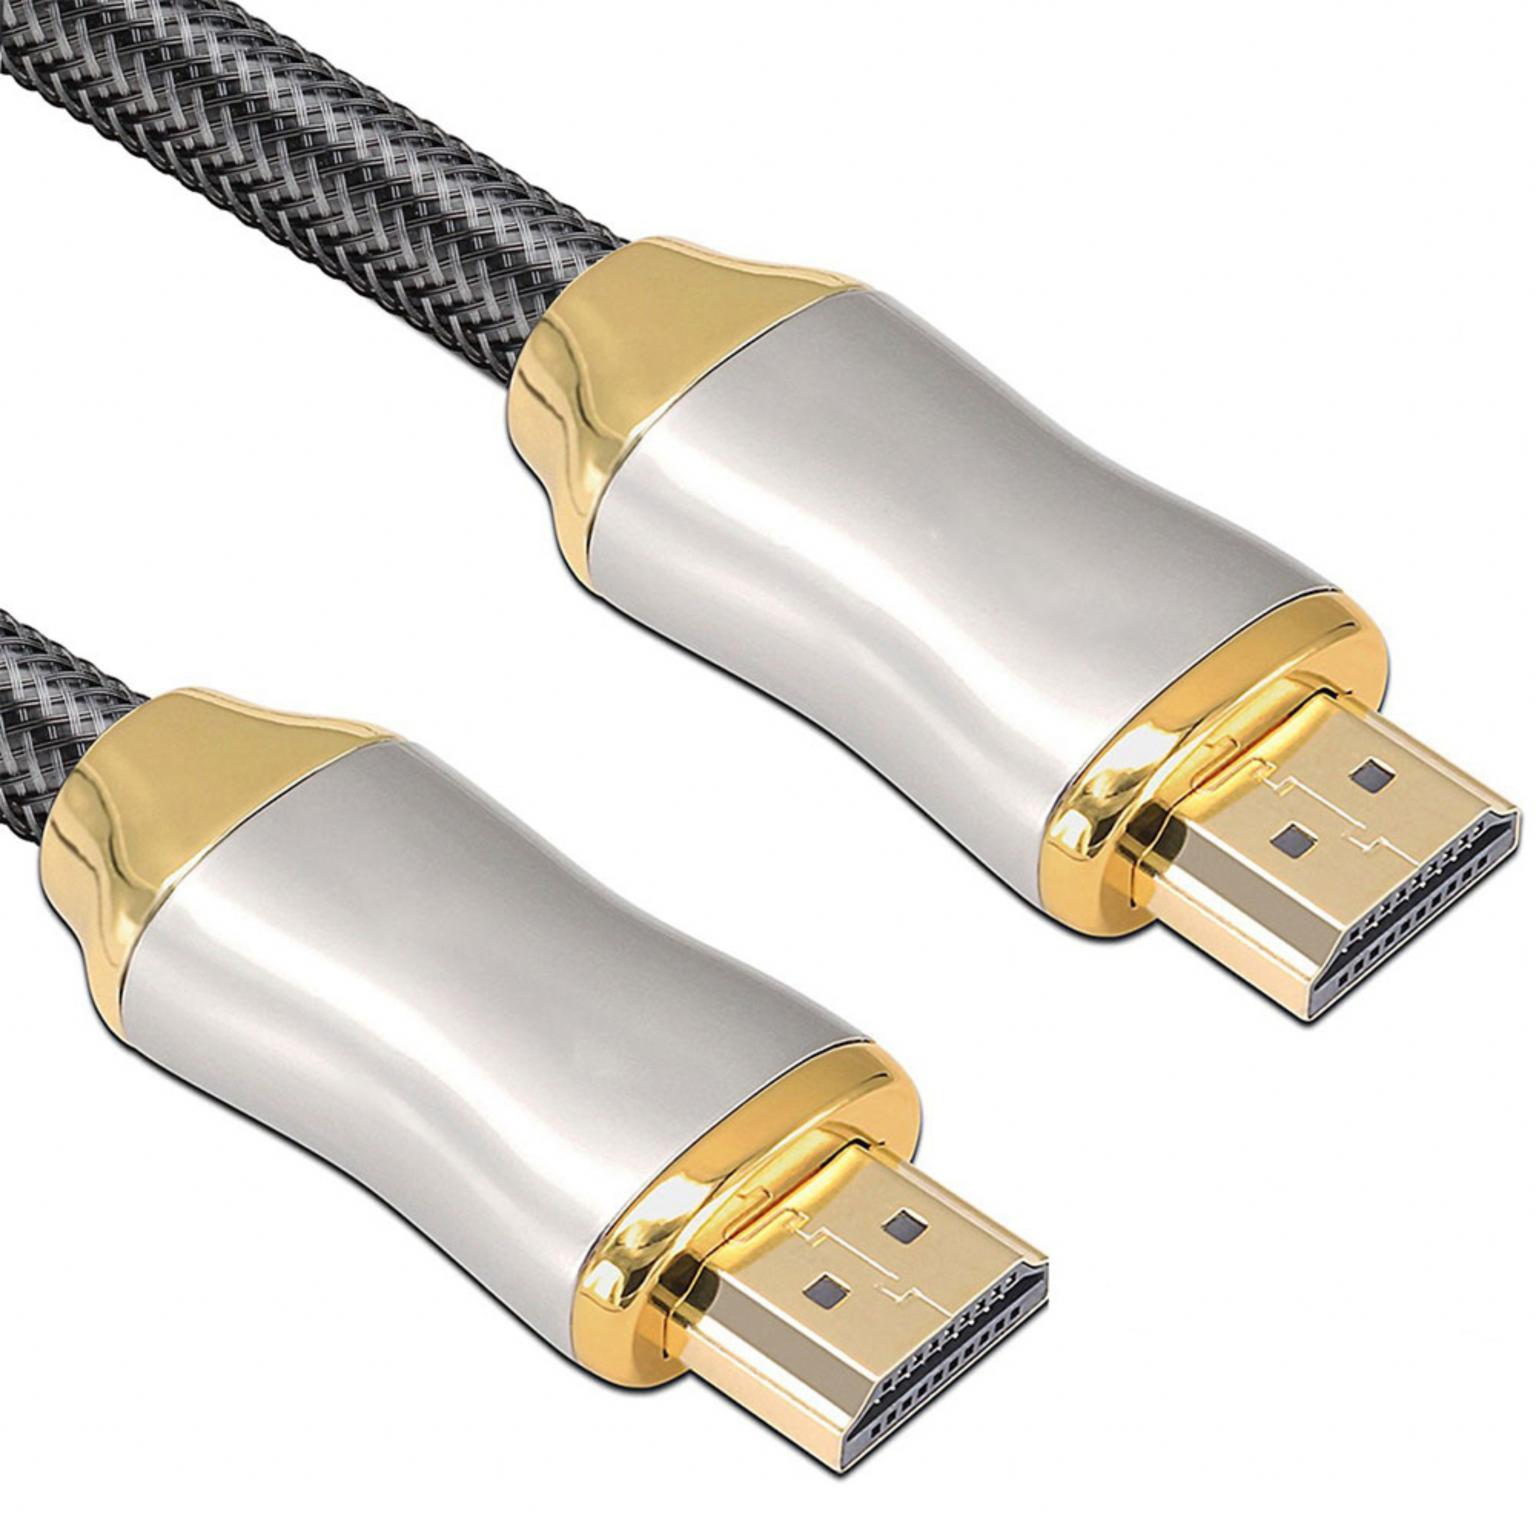 HDMI kabel - Allteq